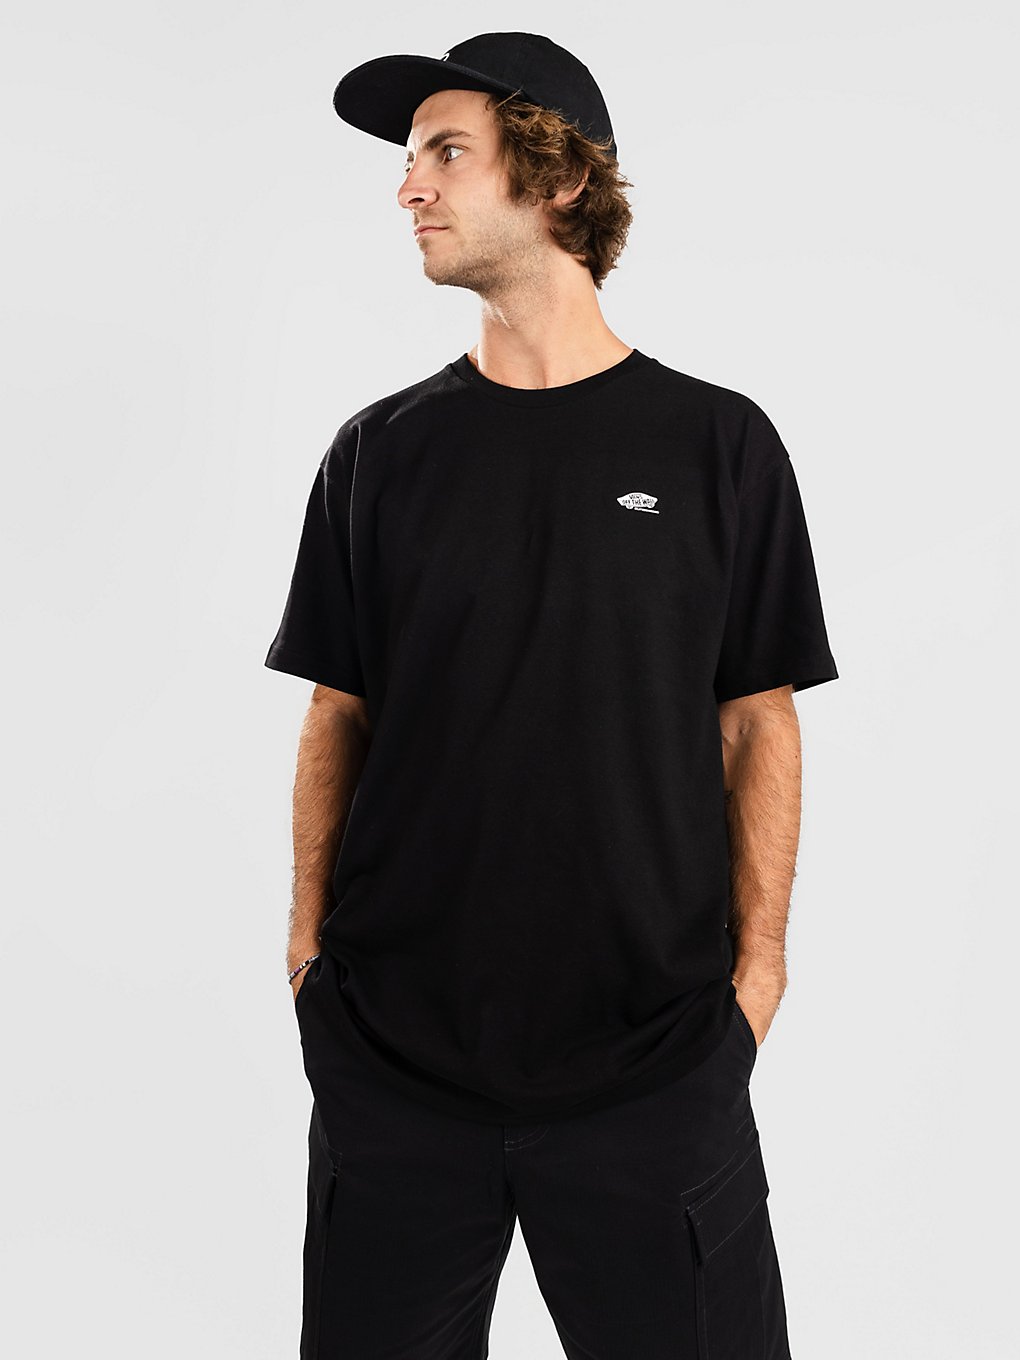 Vans Skate Classics T-Shirt black kaufen